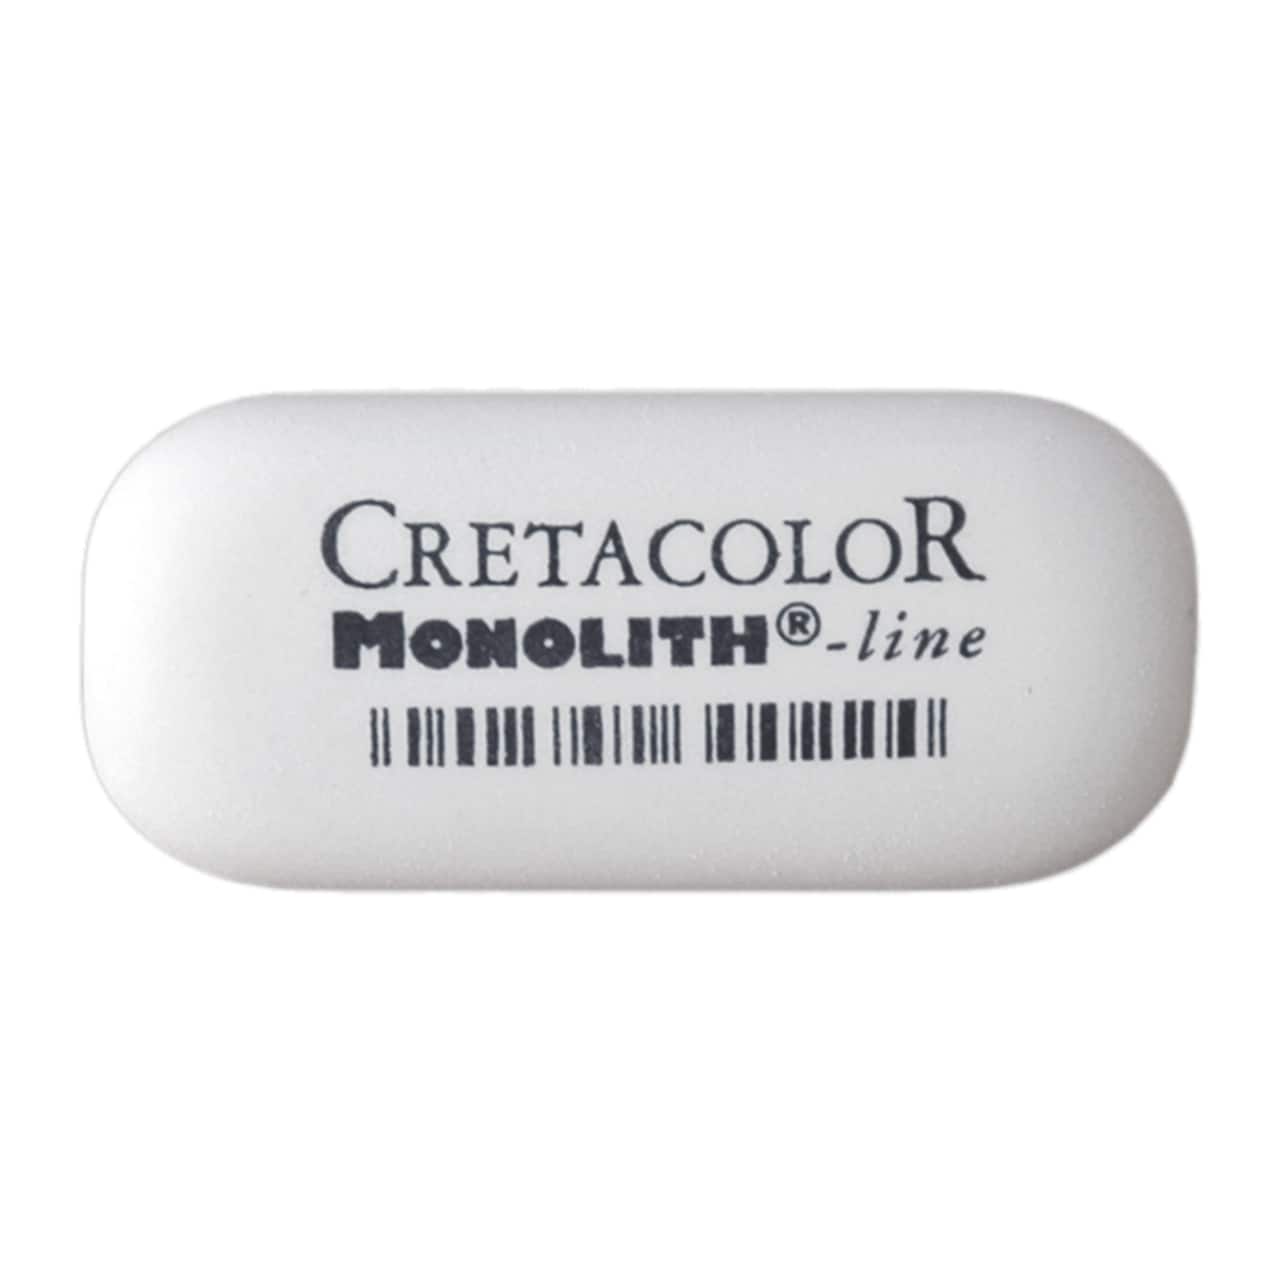 Cretacolor Monolith Large Eraser